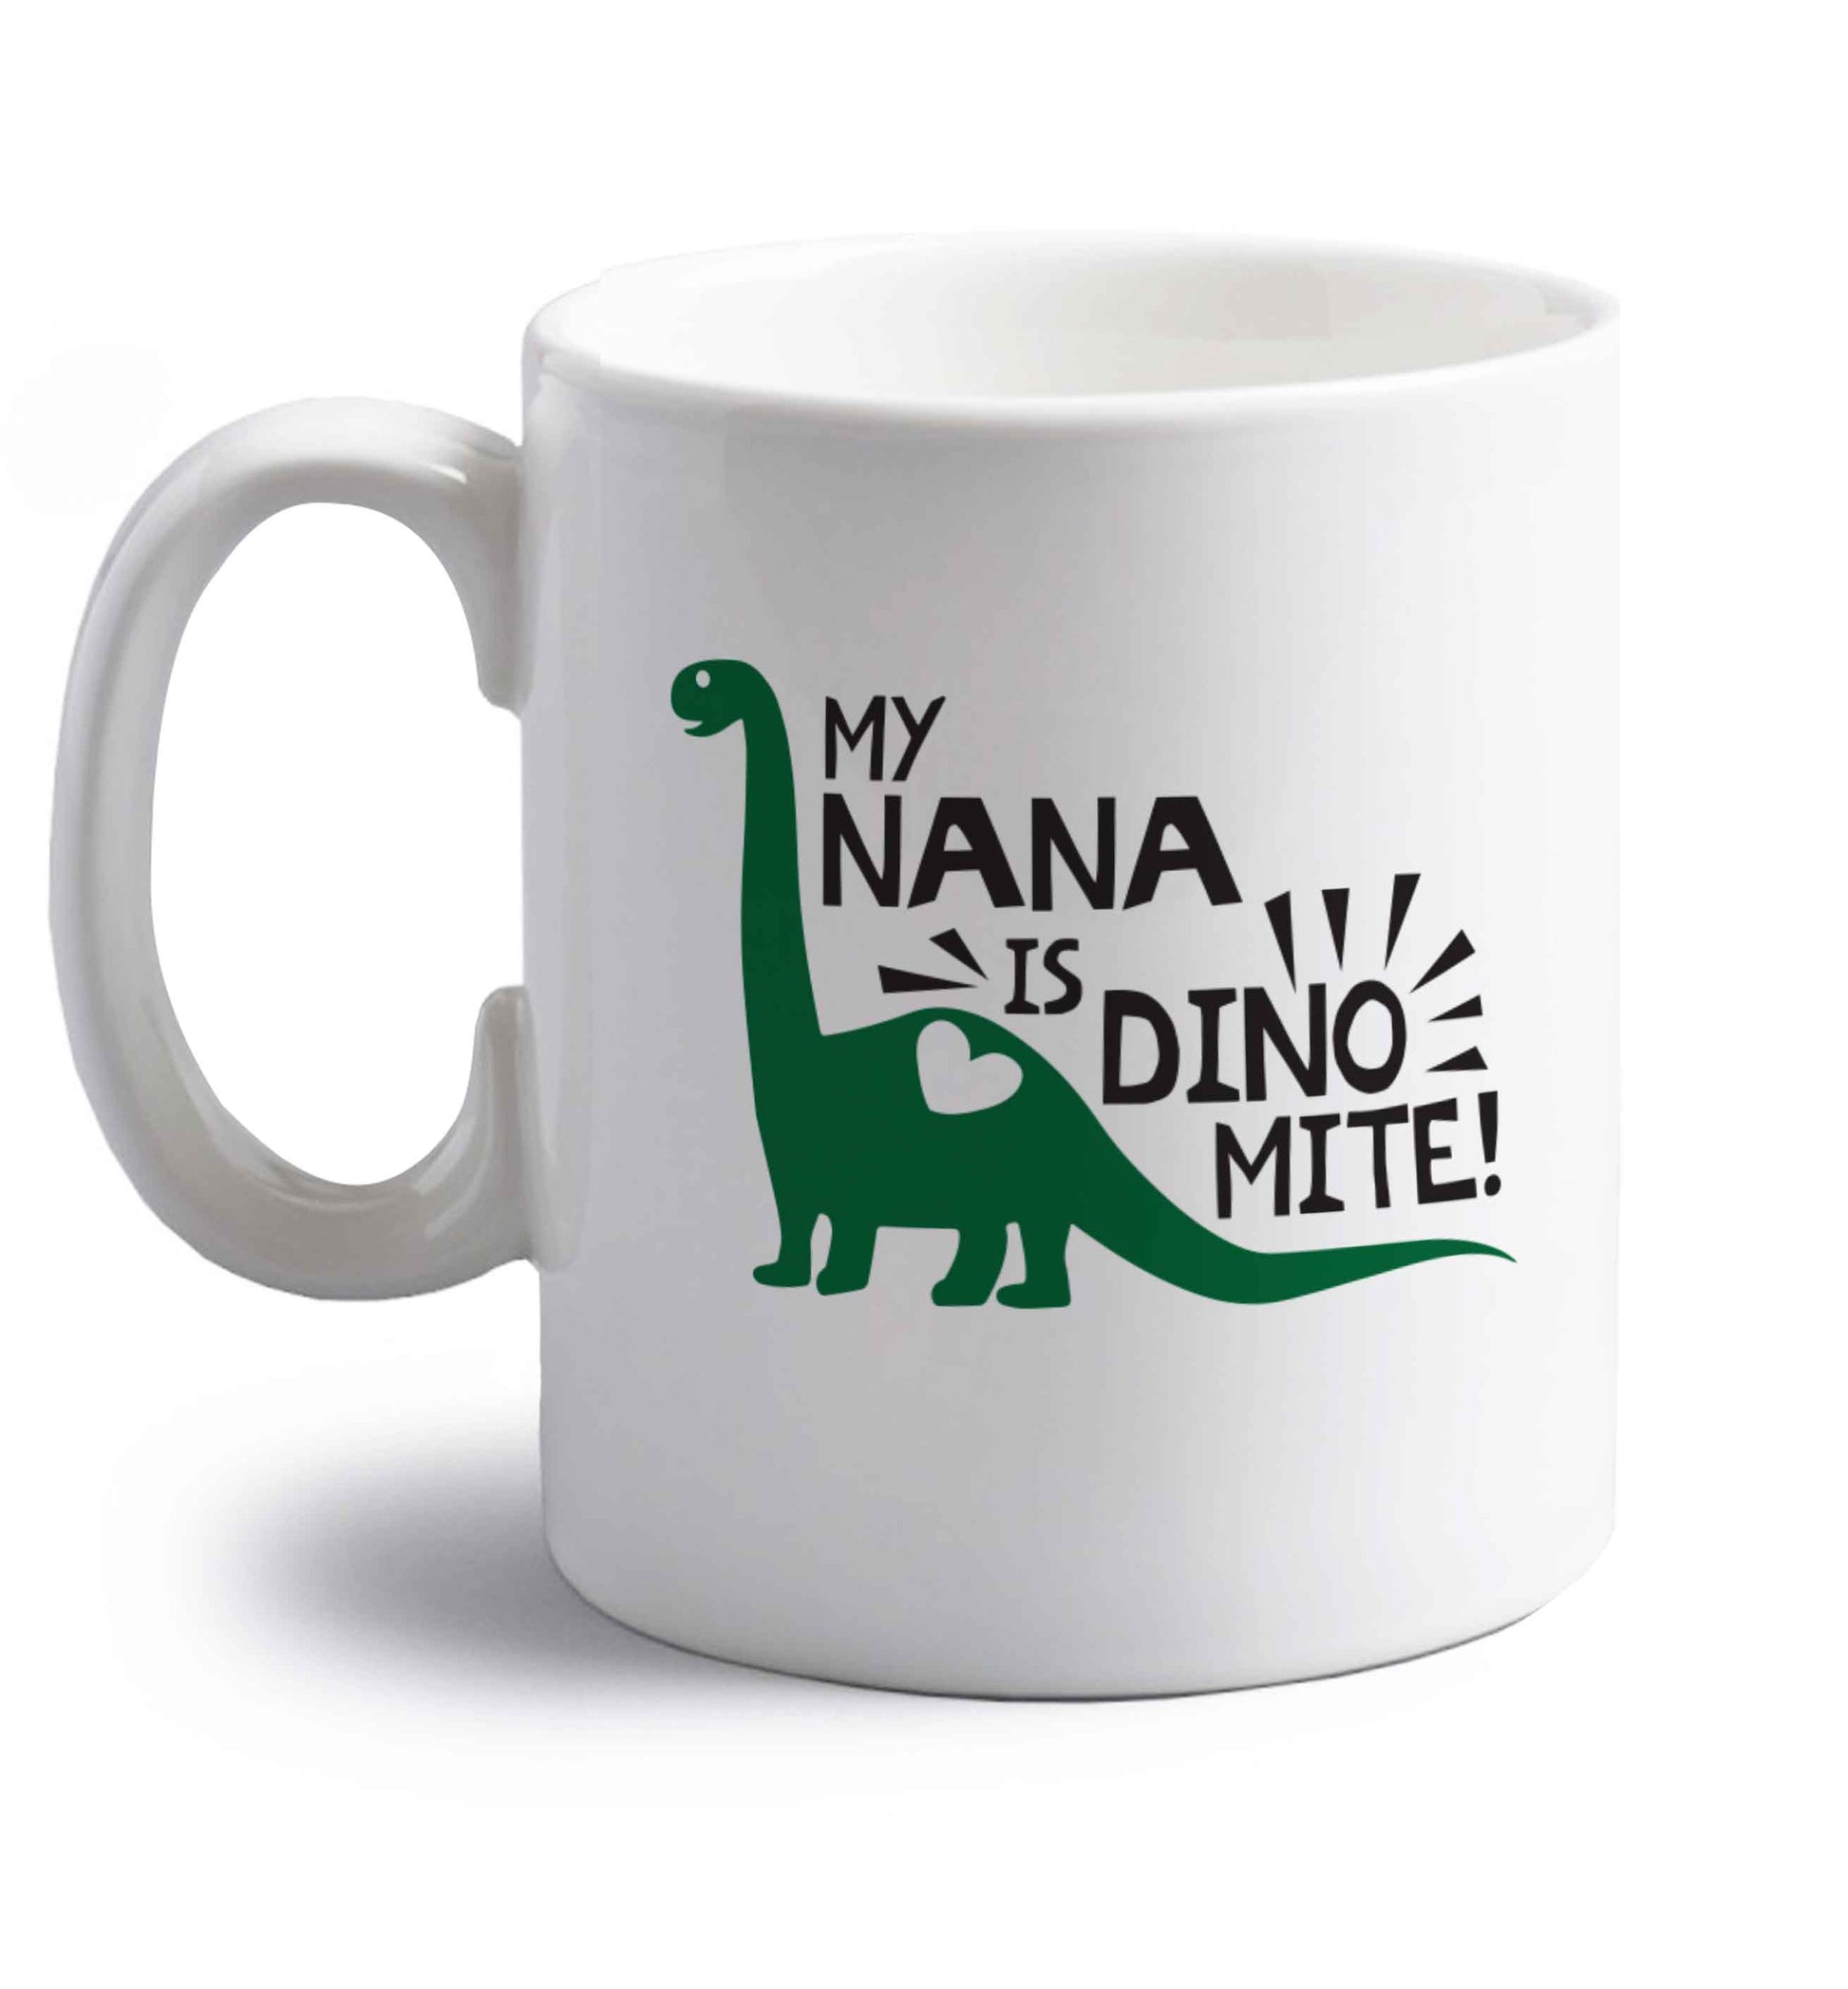 My nana is dinomite! right handed white ceramic mug 